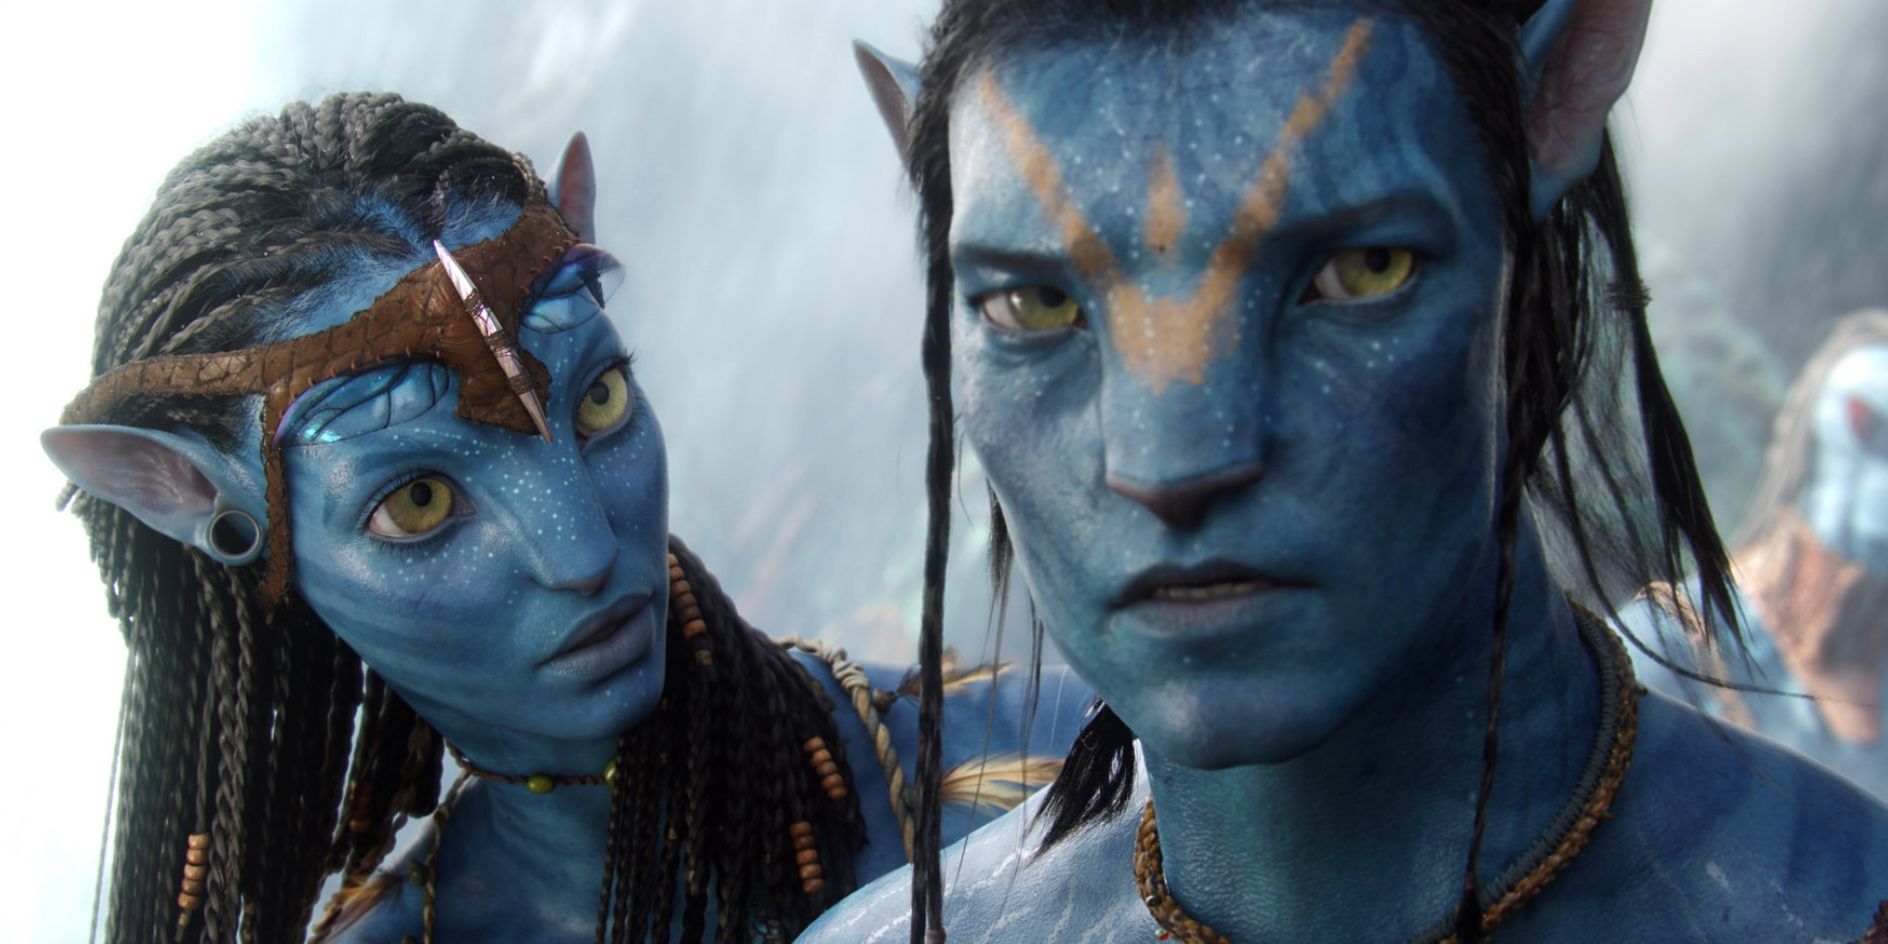 Zoe Saldana and Sam Worthington in 'Avatar'